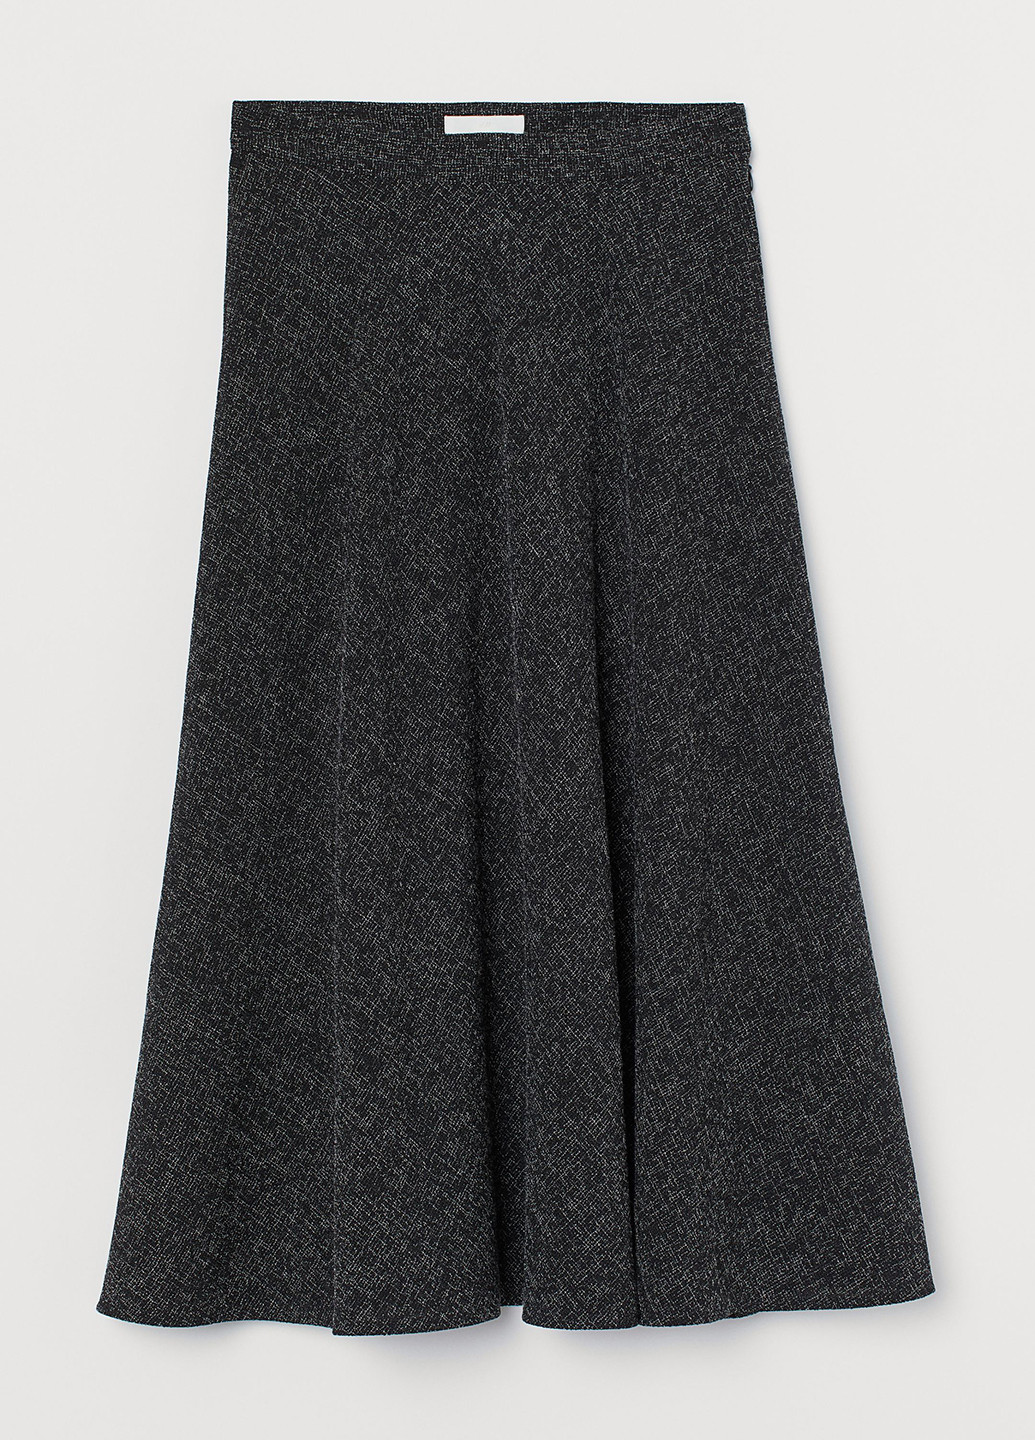 Черно-белая кэжуал с абстрактным узором юбка H&M а-силуэта (трапеция)